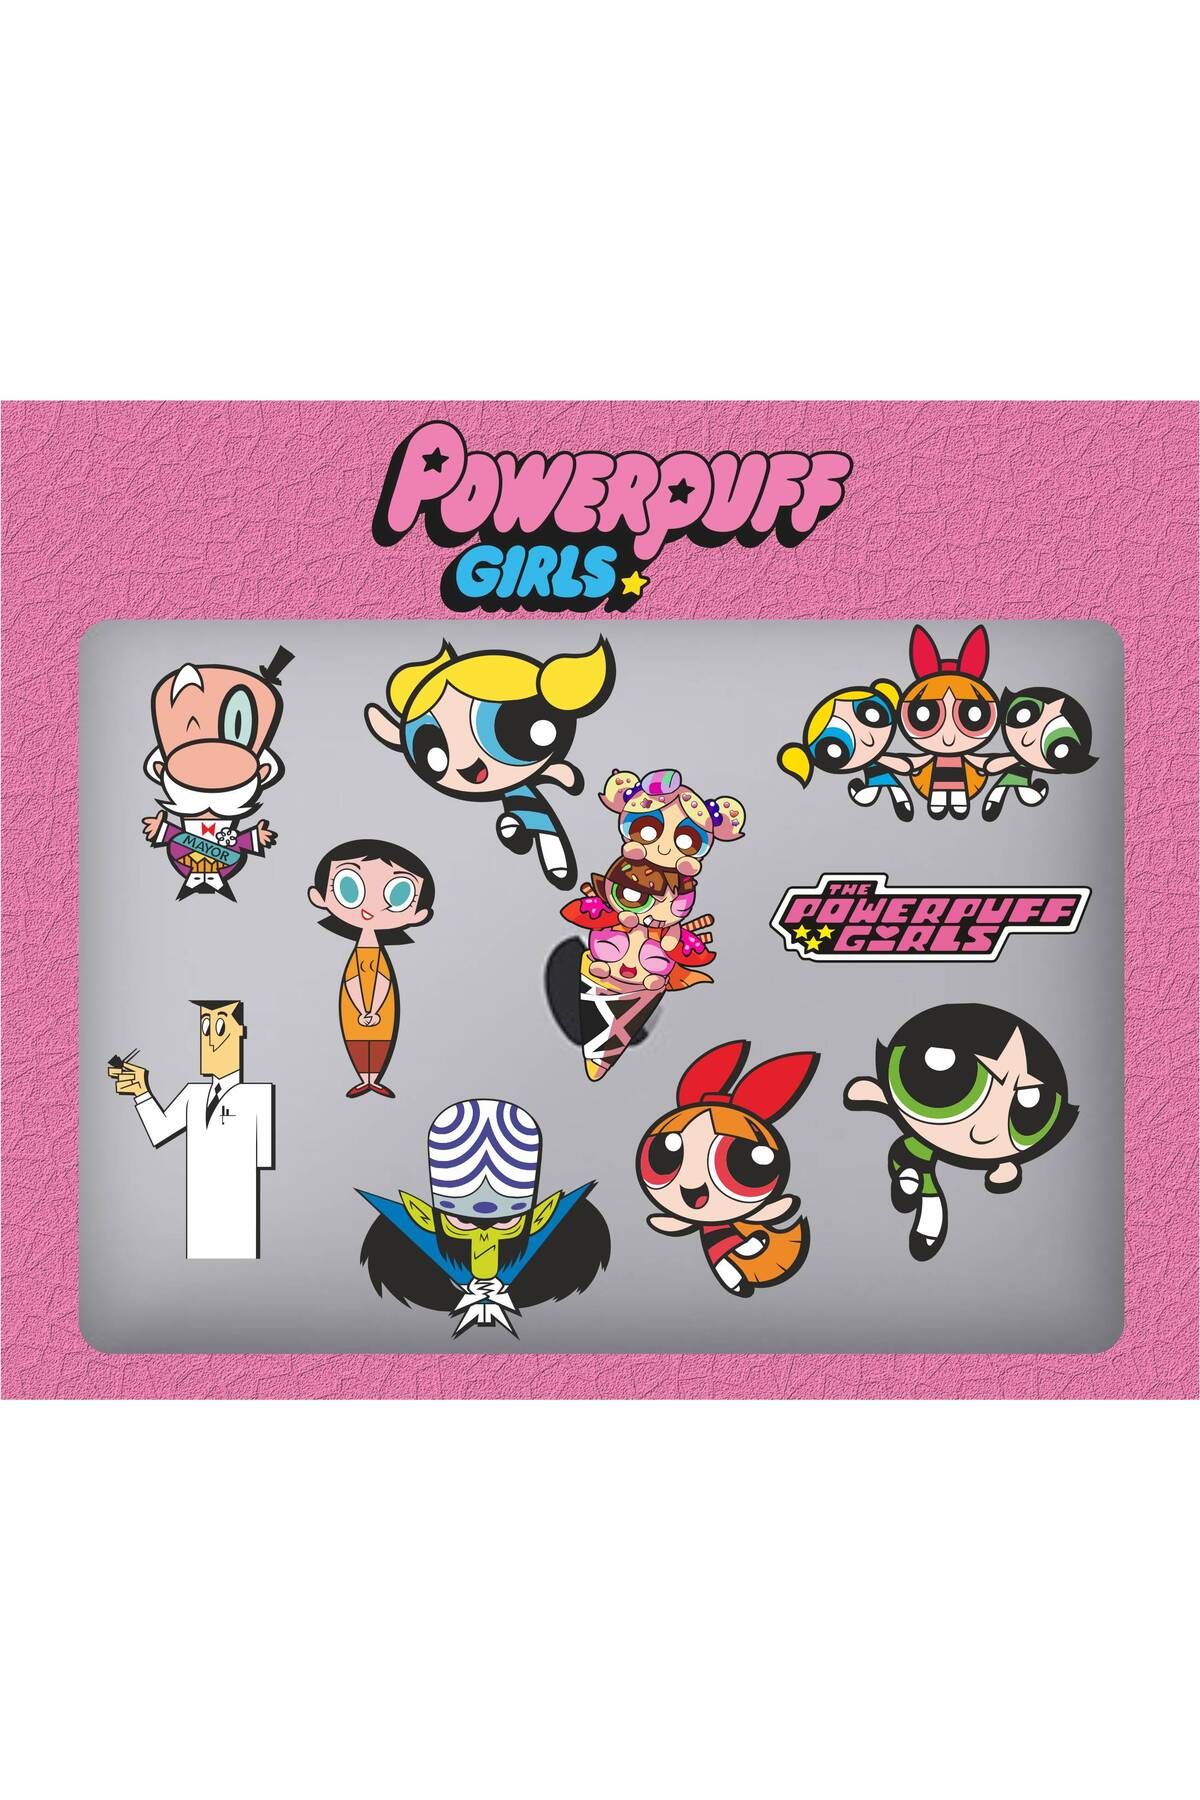  Powerpuff Girls Character 50ct Vinyl Large Deluxe Stickers  Variety Pack - Laptop, Water Bottle, Scrapbooking, Tablet, Skateboard,  Indoor/Outdoor - Set of 50